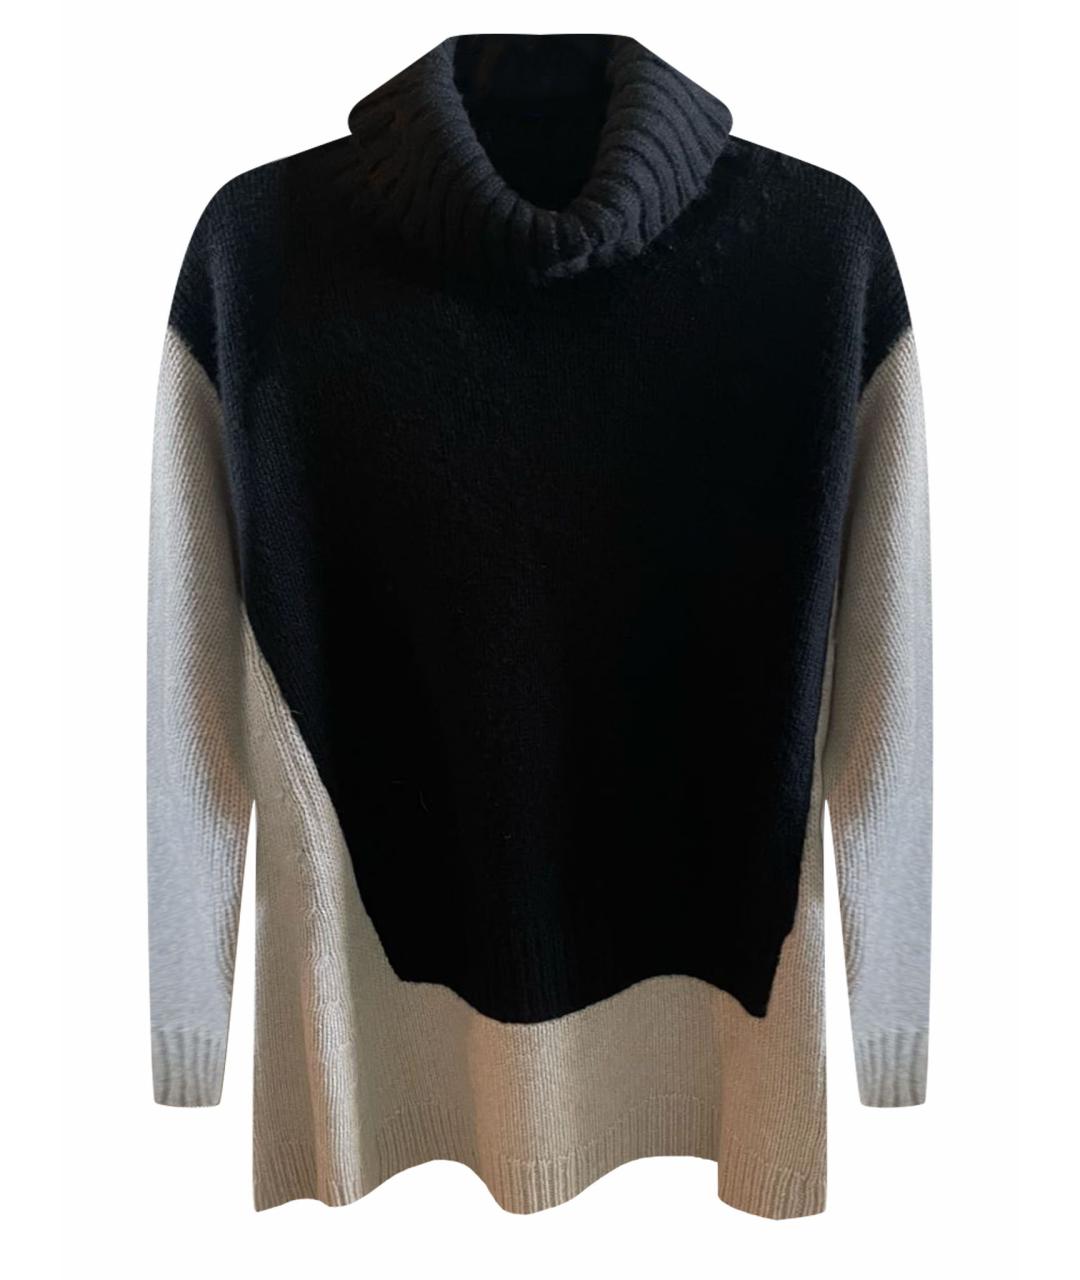 CELINE PRE-OWNED Бежевый кашемировый джемпер / свитер, фото 1